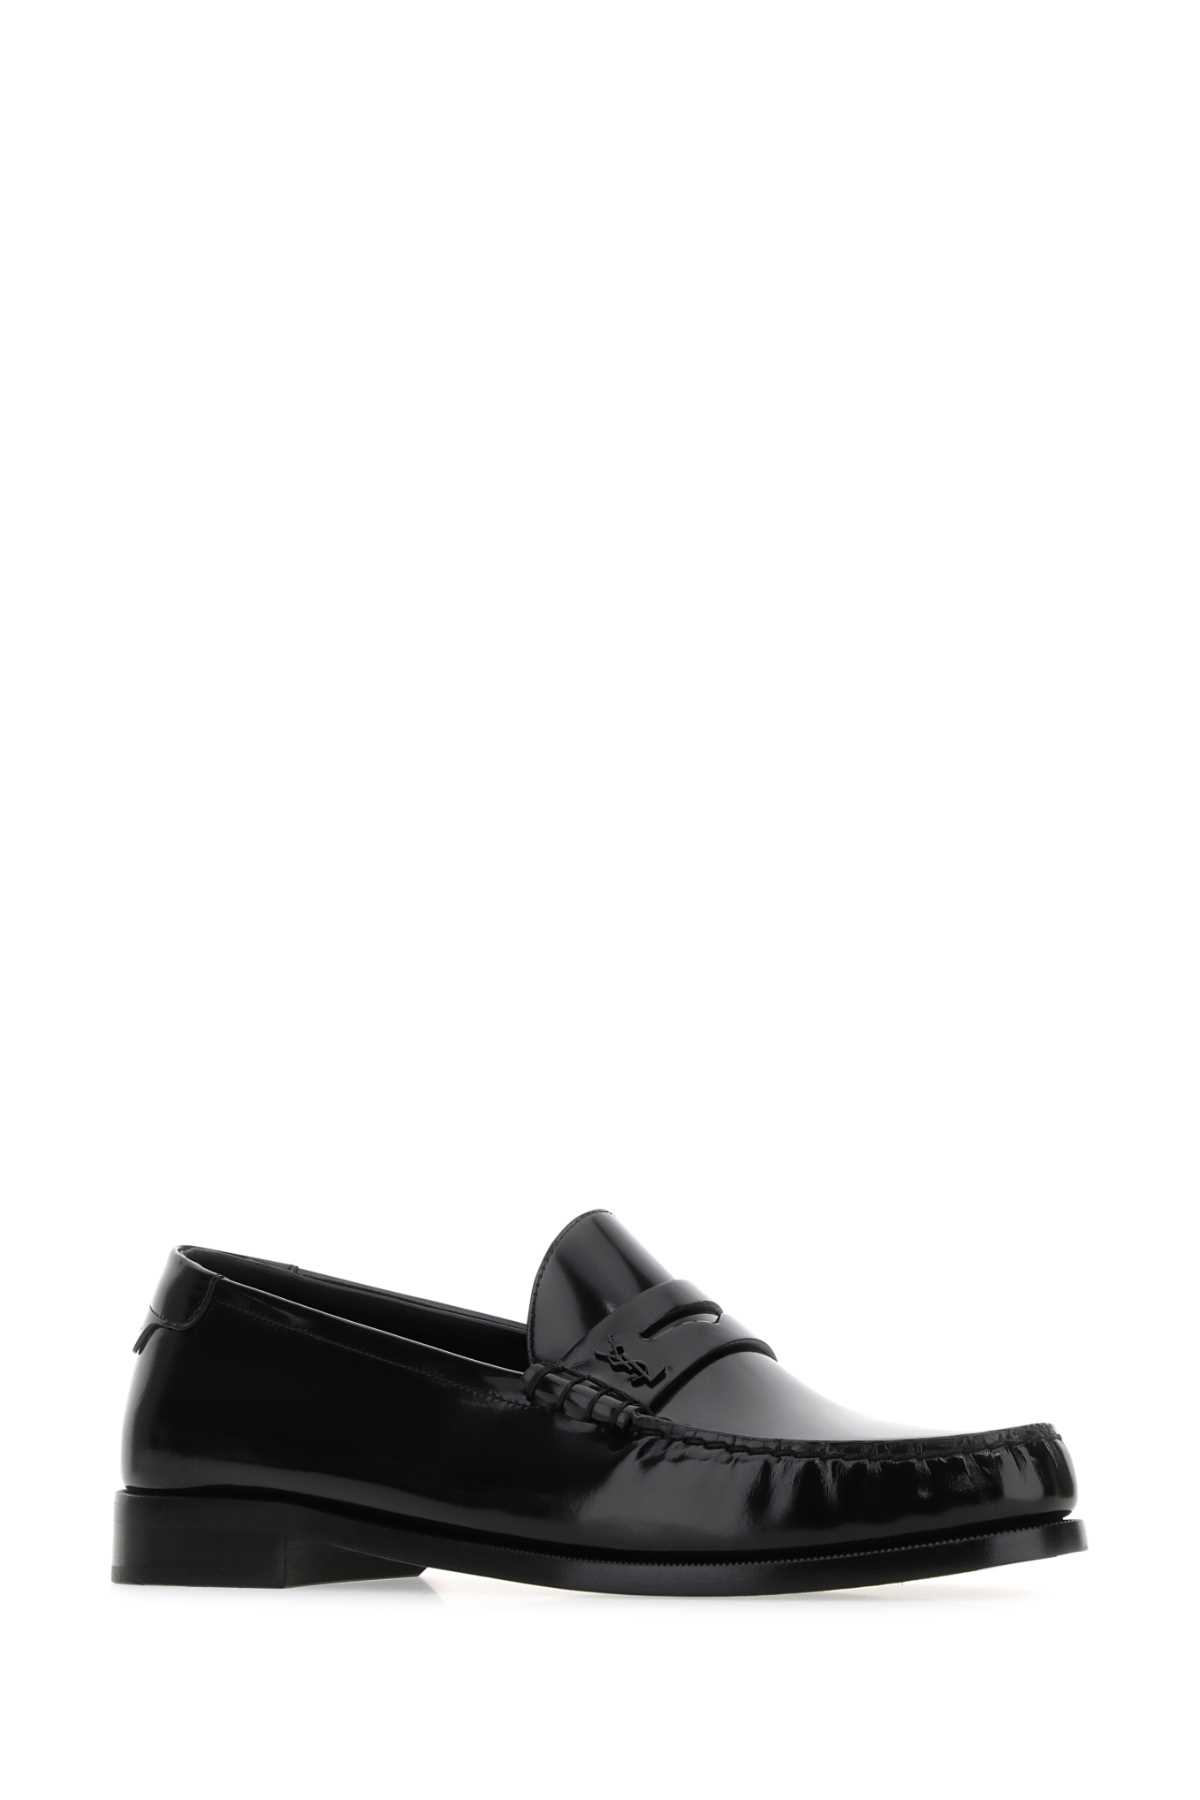 Shop Saint Laurent Black Leather Magnum Loafers